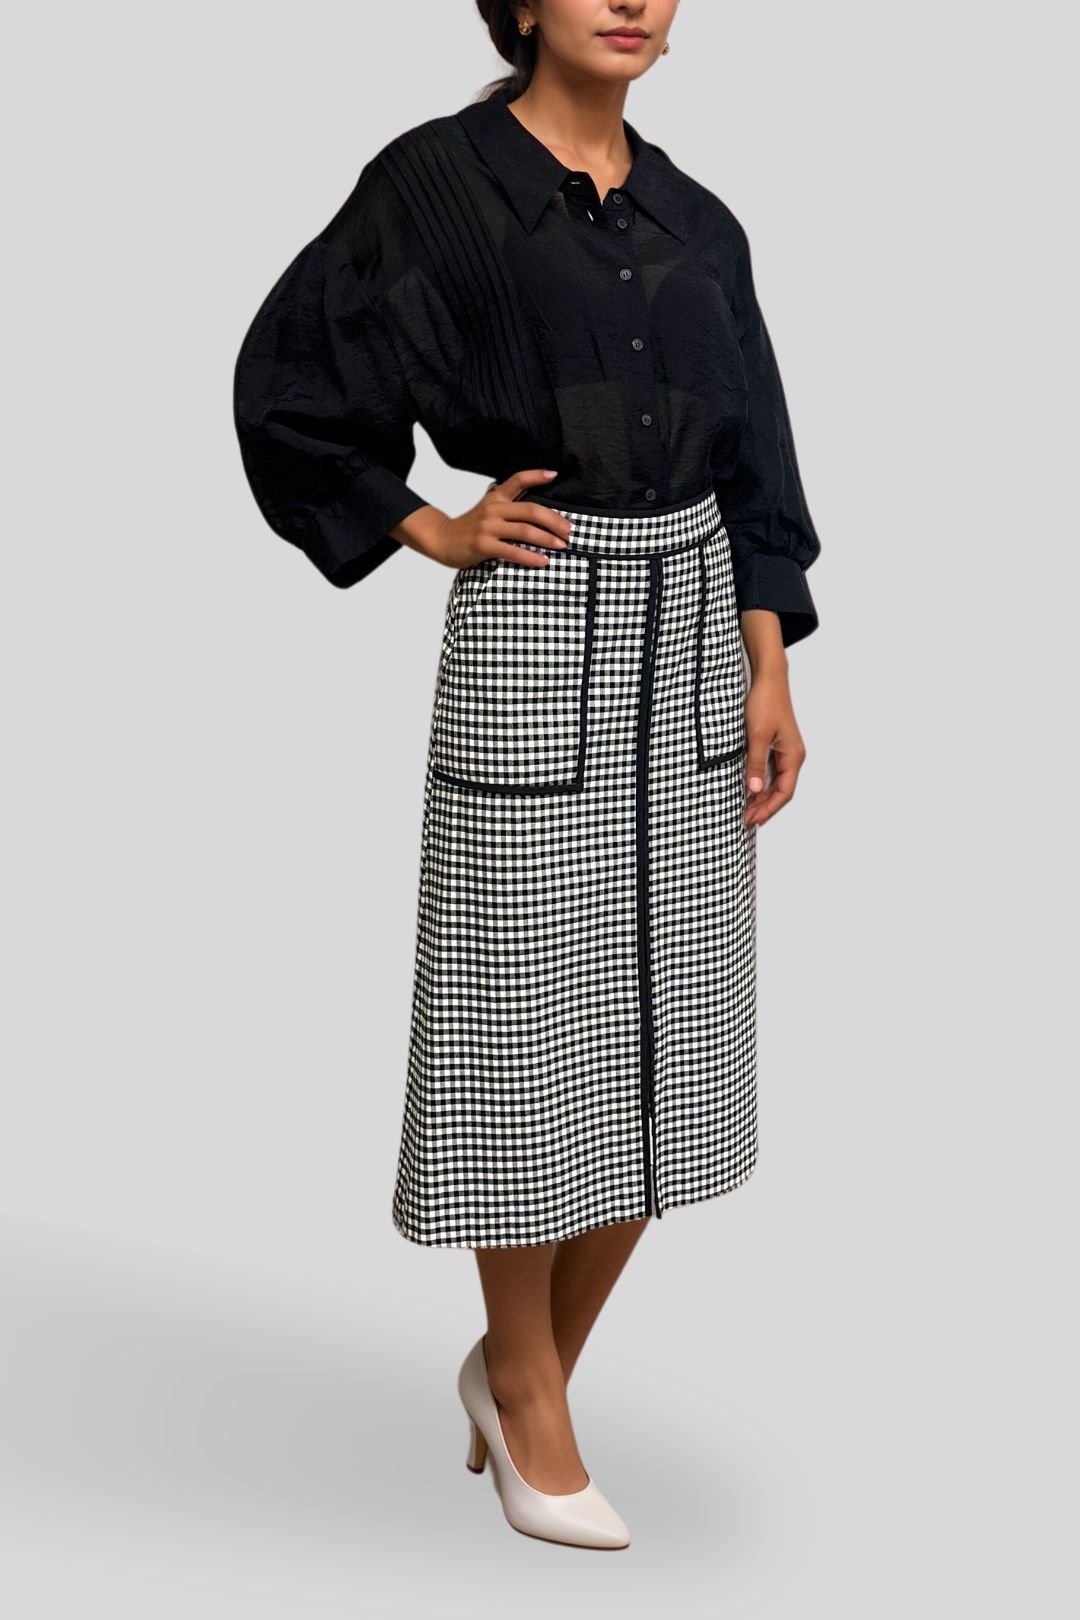 Veronika Maine - Checkered Pencil Flare Skirt Black and White